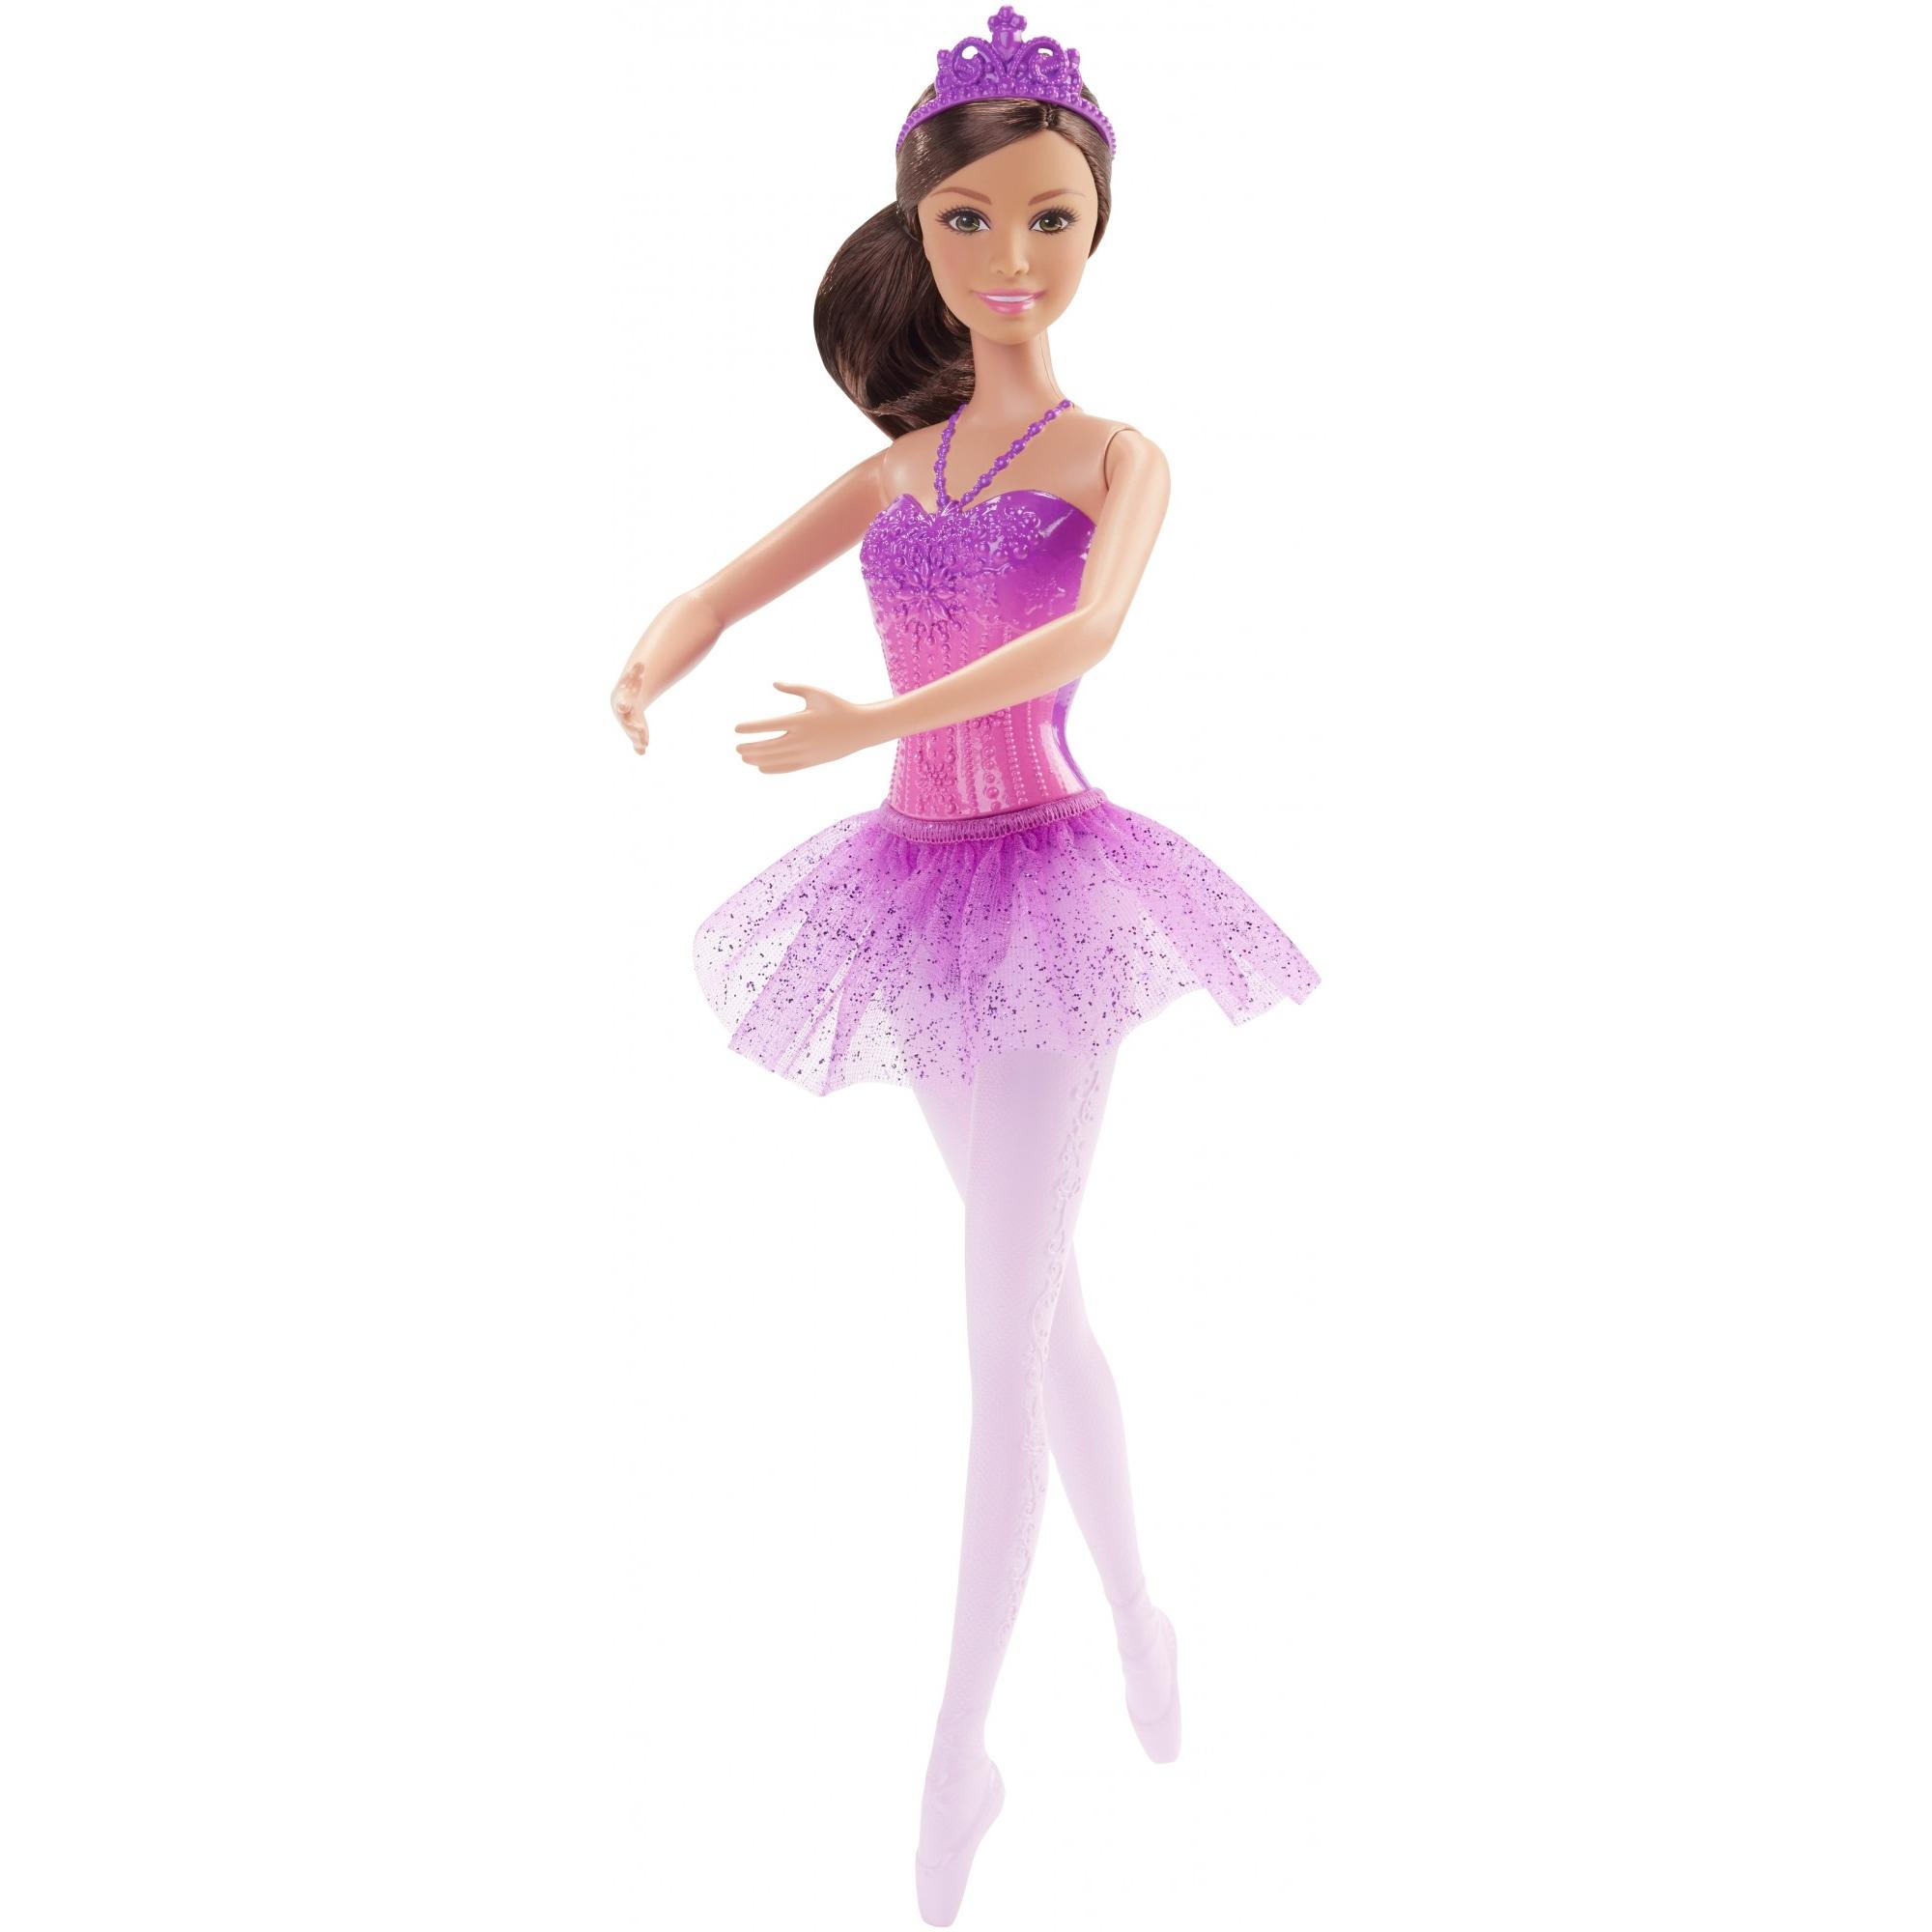 Barbie Ballerina Doll with Removable Purple Tutu & Tiara - image 3 of 6